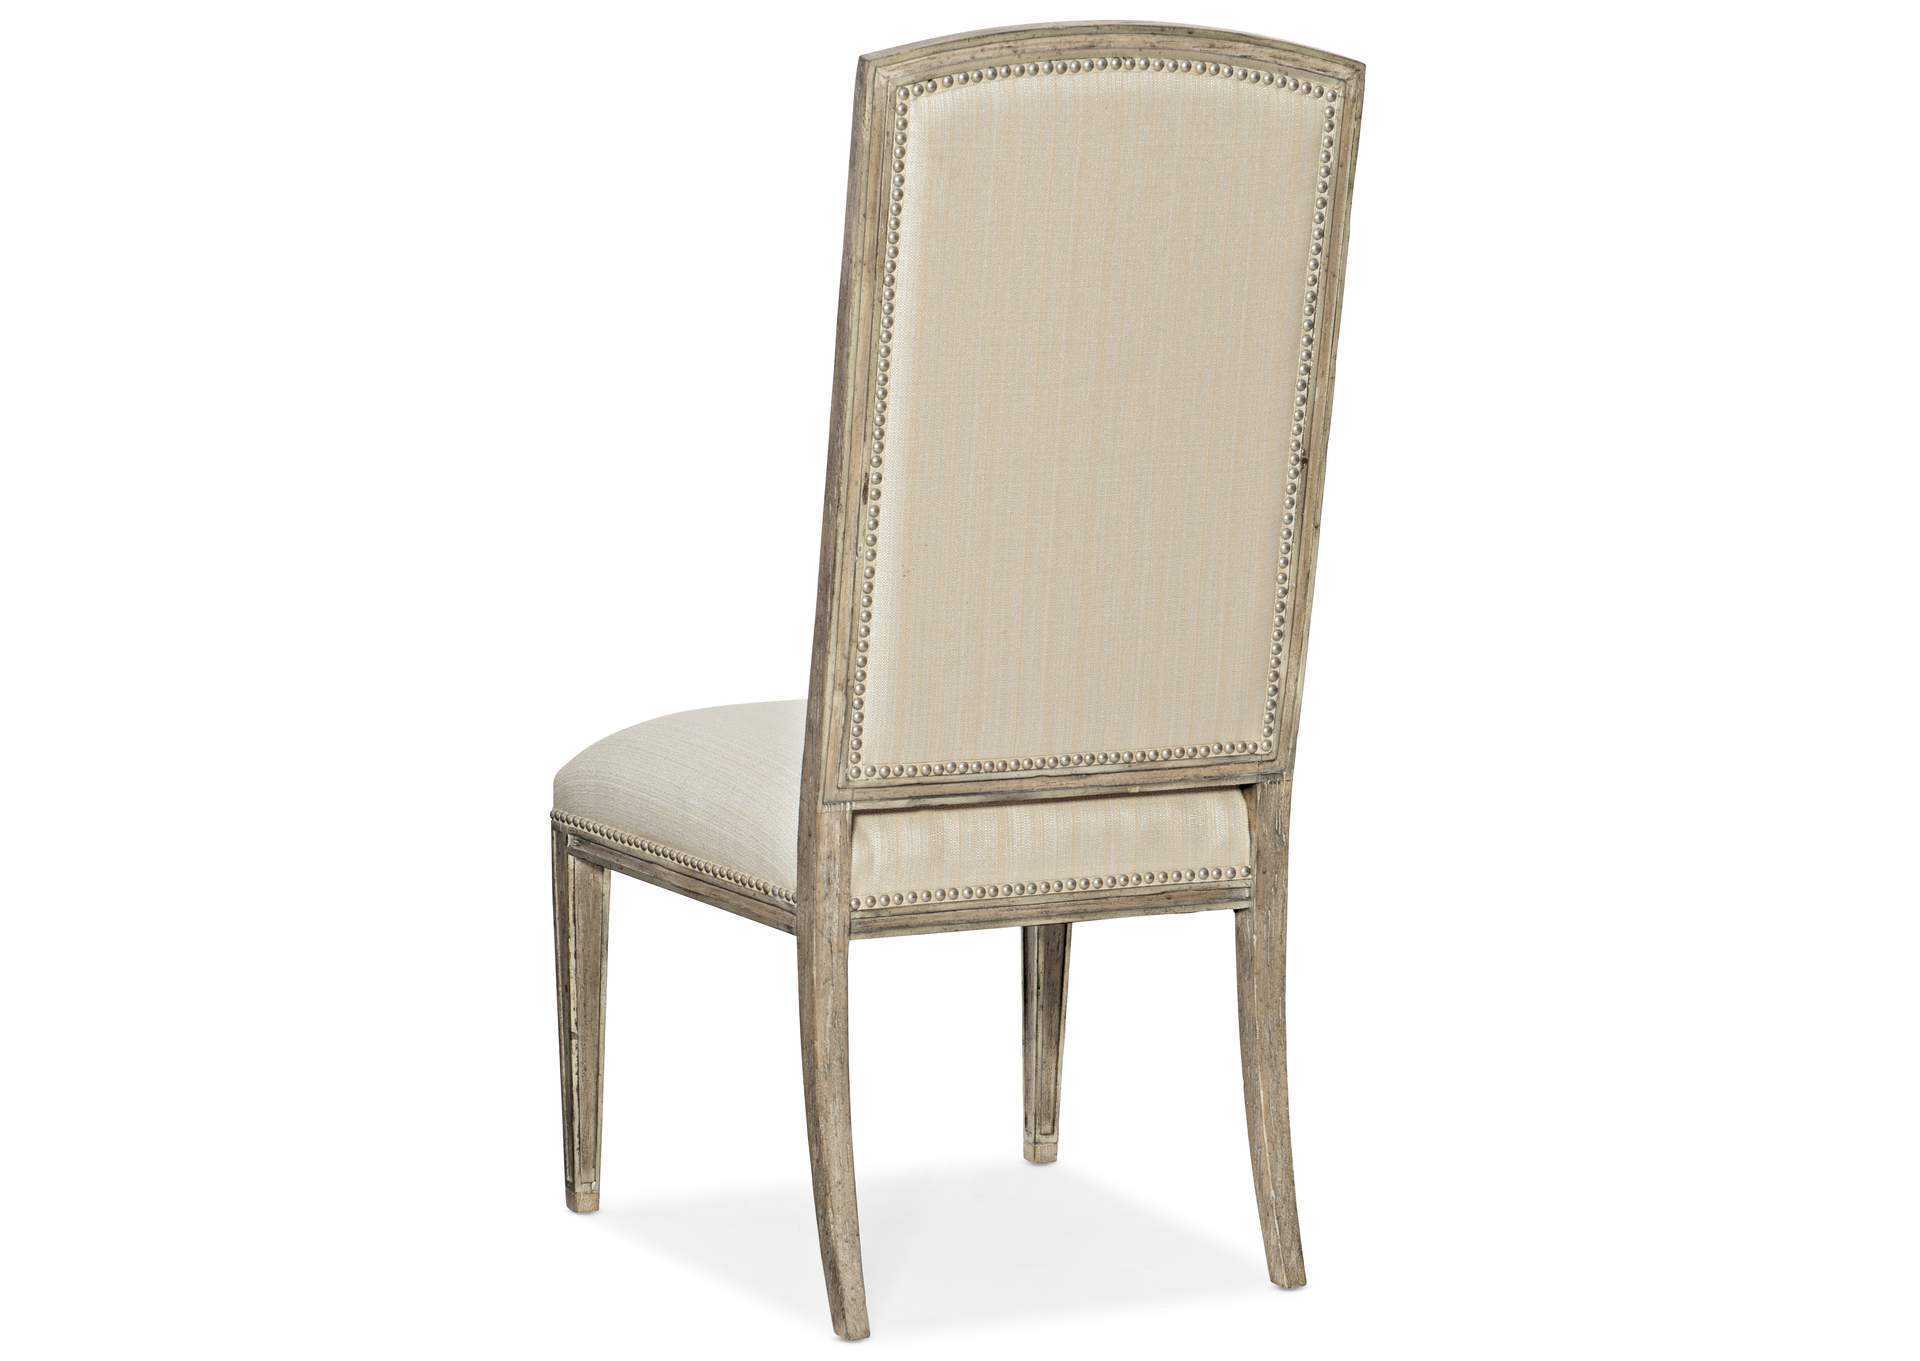 Sanctuary Cambre Side Chair - 2 Per Carton - Price Ea,Hooker Furniture